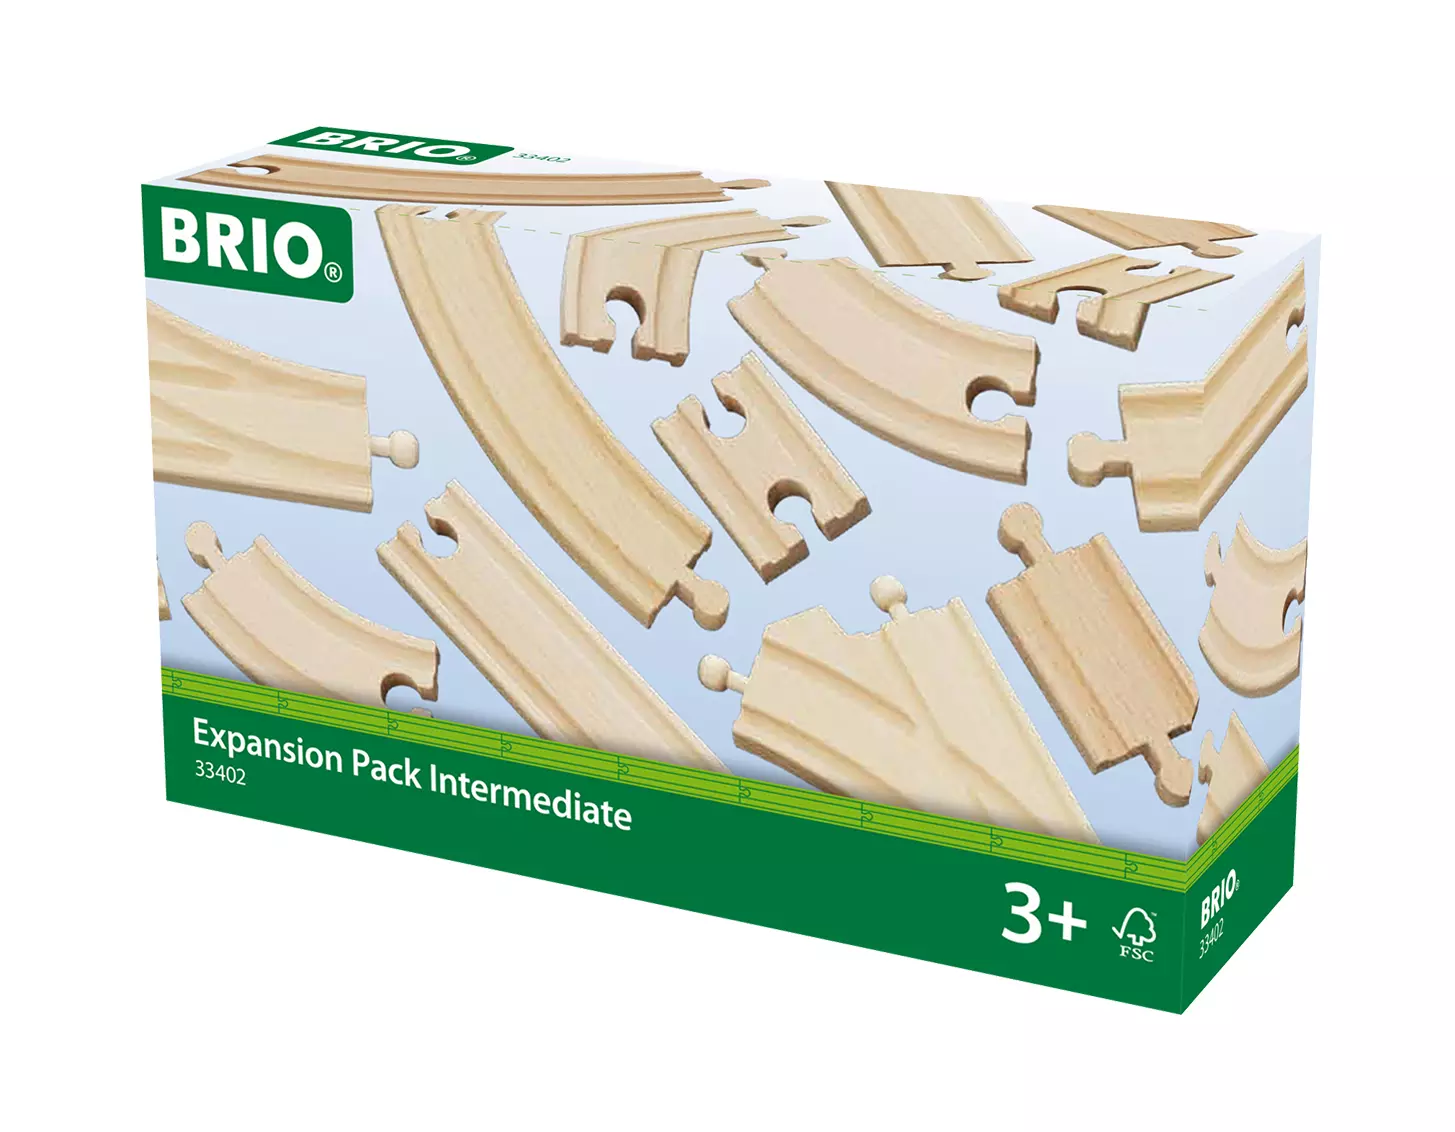 Brio Expansion Pack Intermediate 16Pcs. 33402